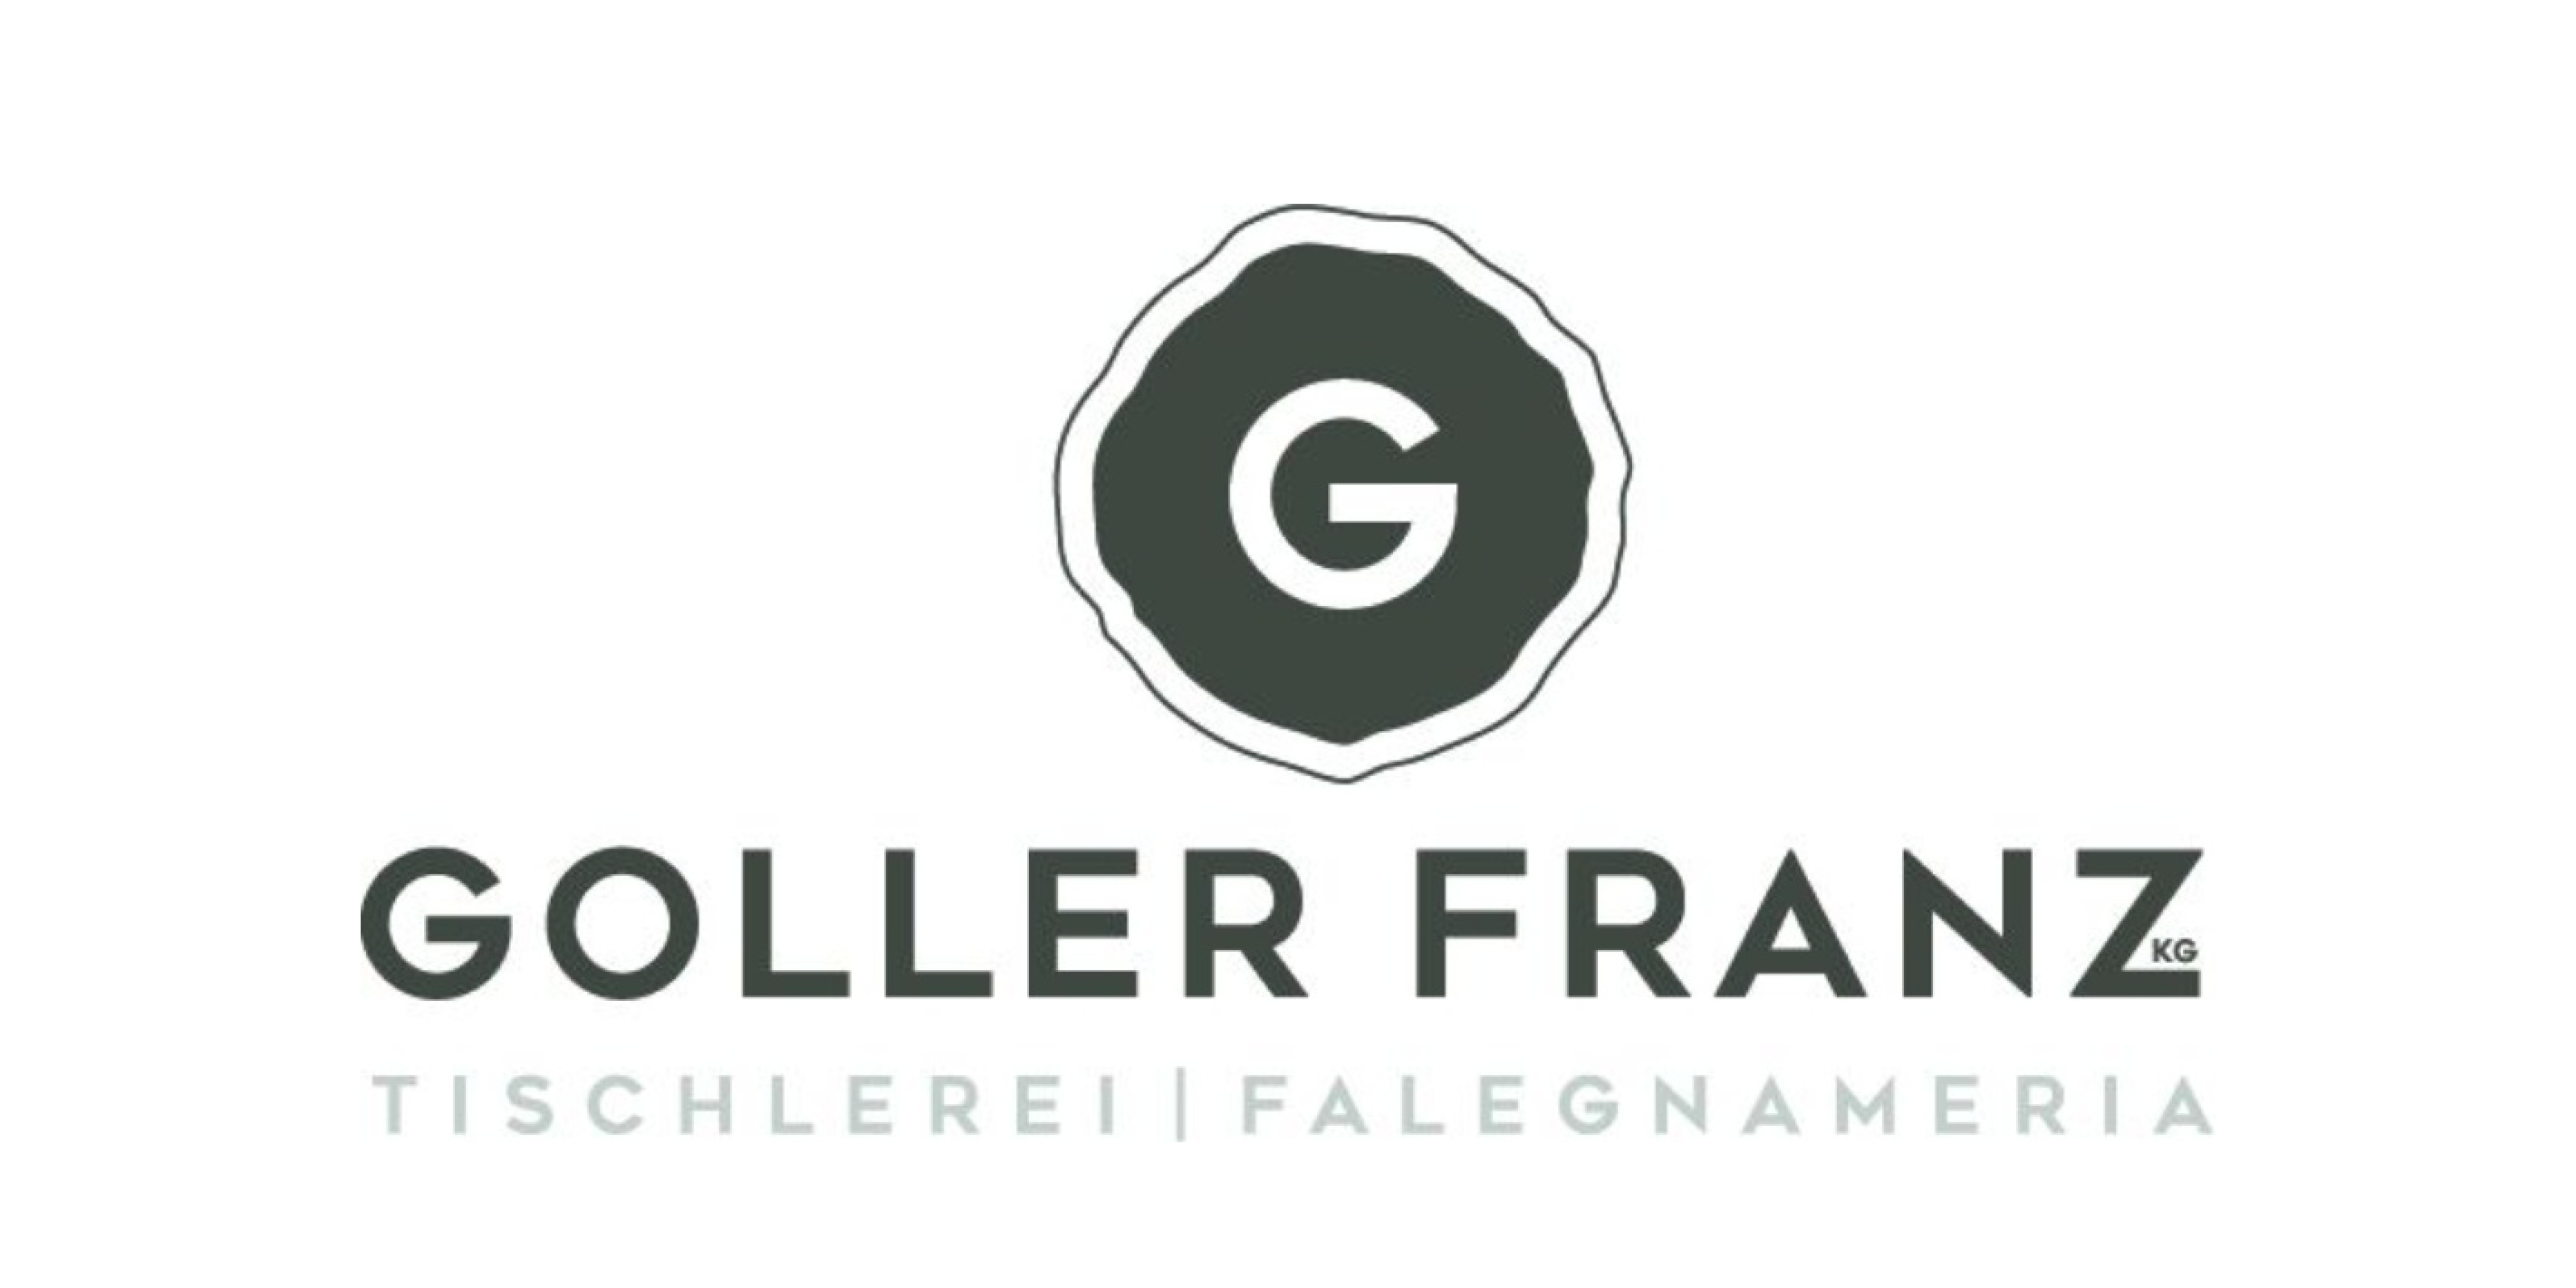 Goller Franz KG | sas